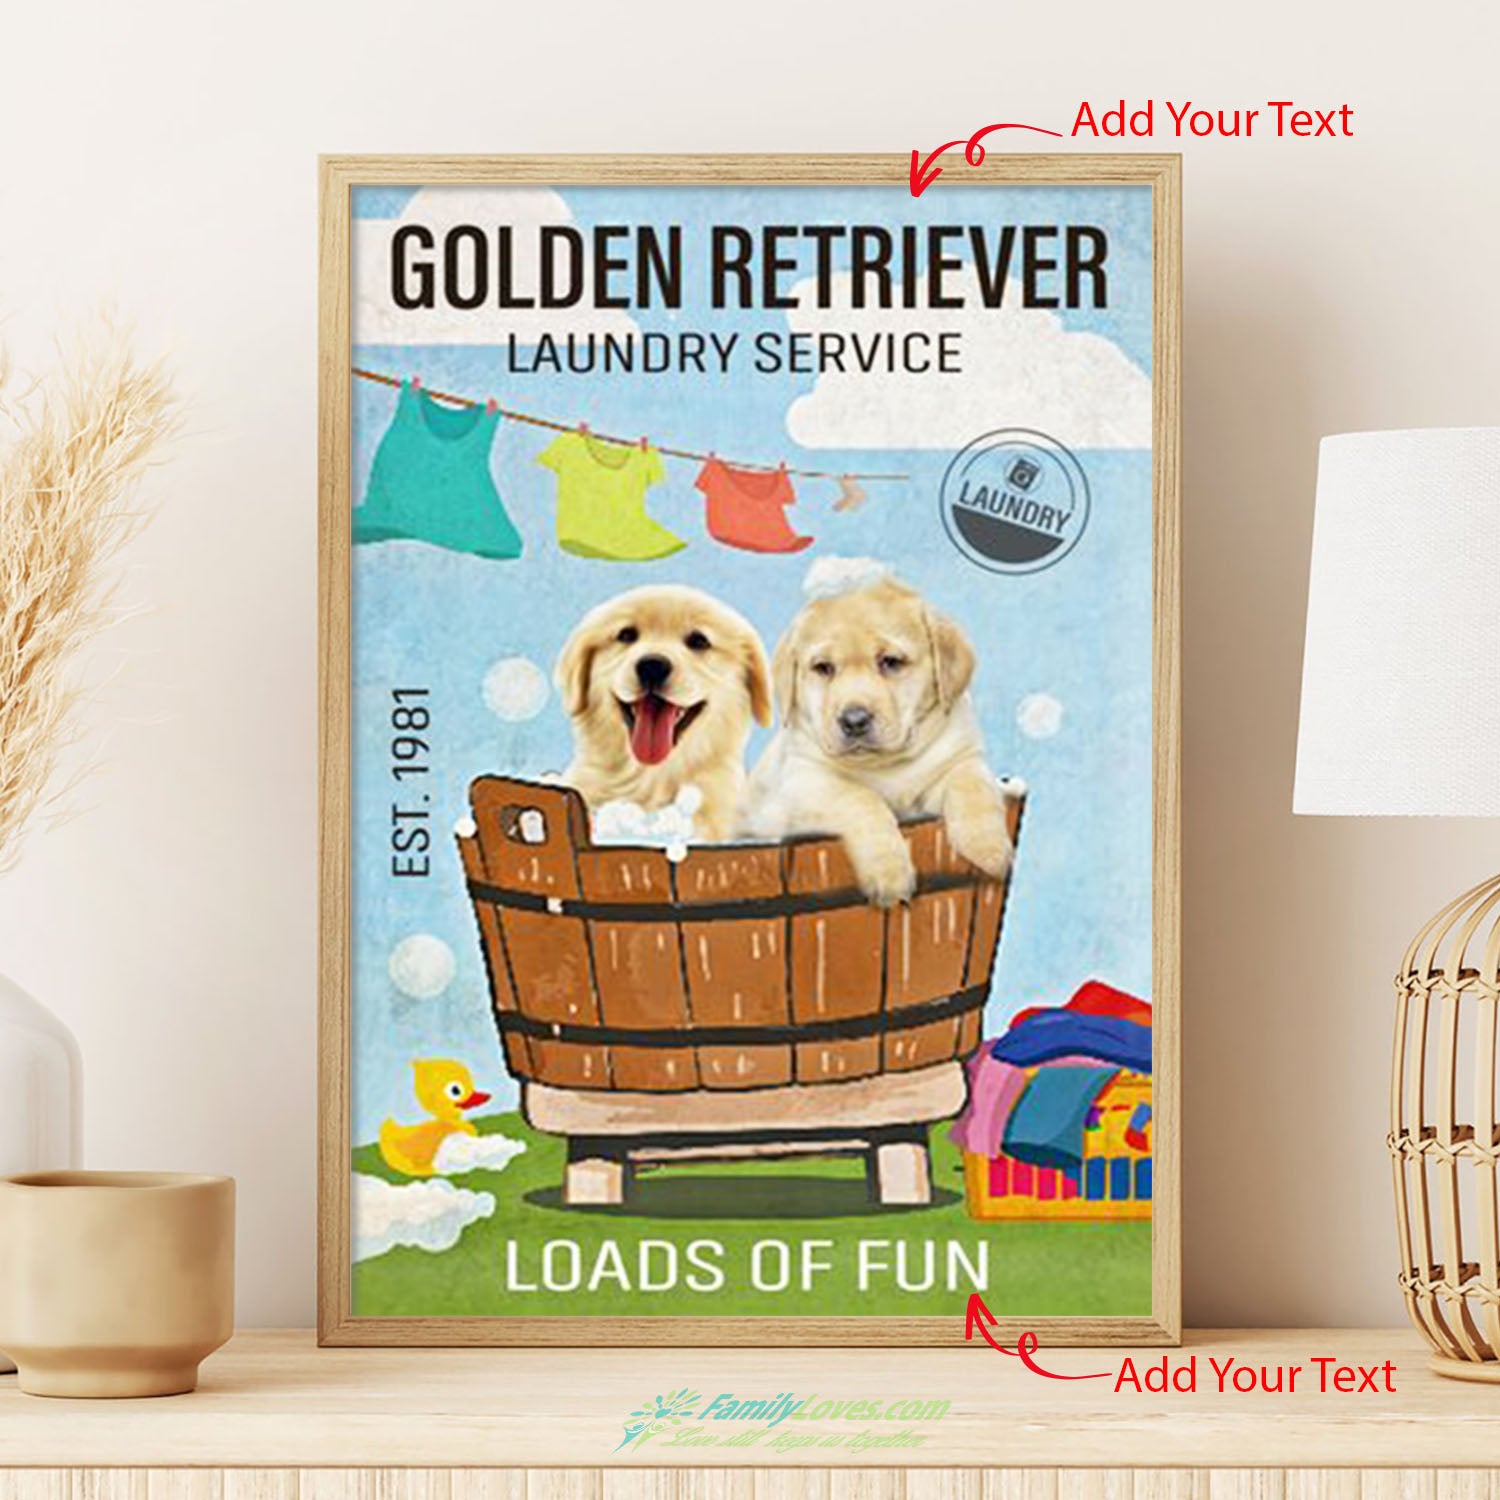 Golden Retriever Laundry Service Loads Of Fun Canvas Prints Poster Art Prints All Size 1